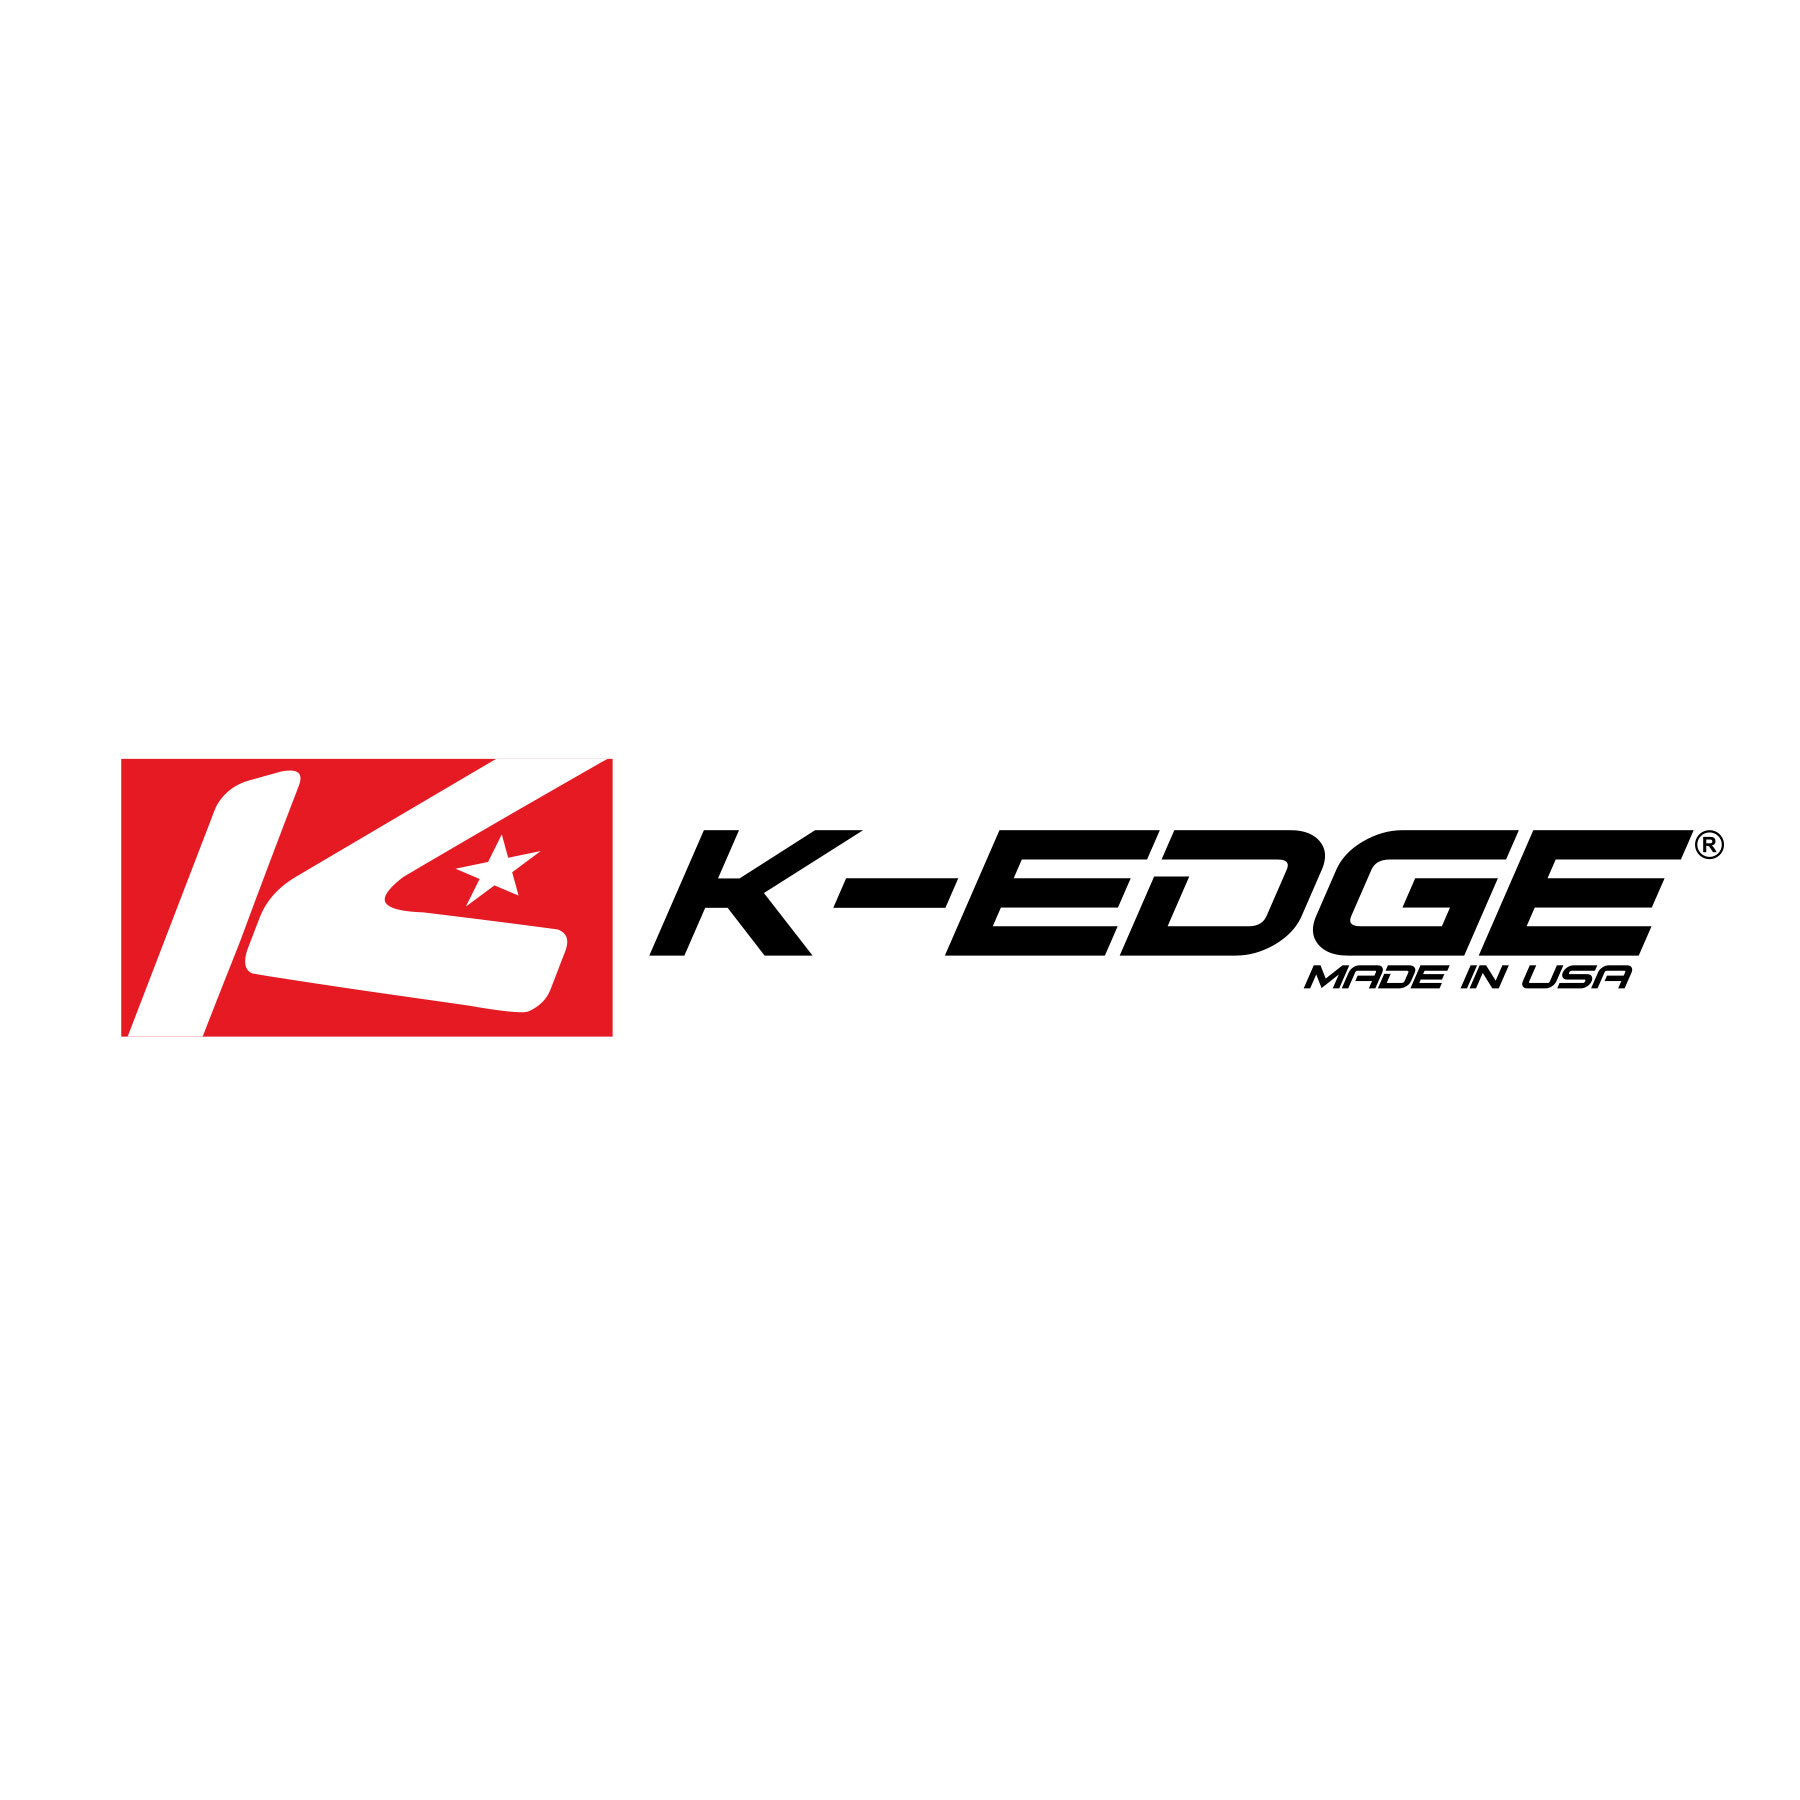 K-EDGE (ケーエッジ)LOGO Image